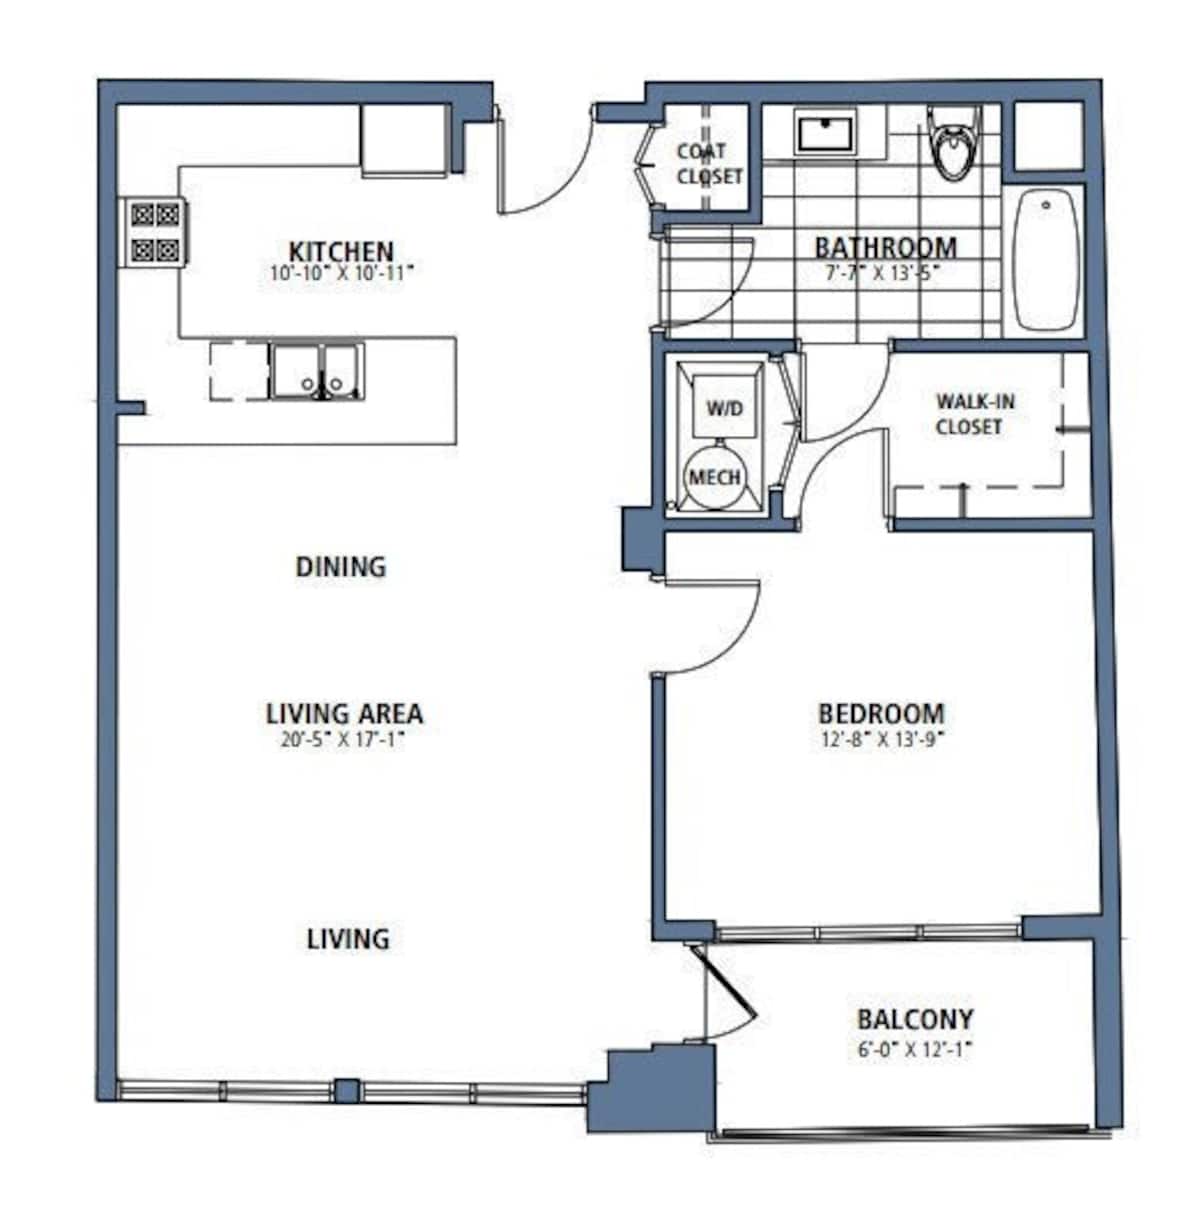 Floorplan diagram for A13, showing 1 bedroom